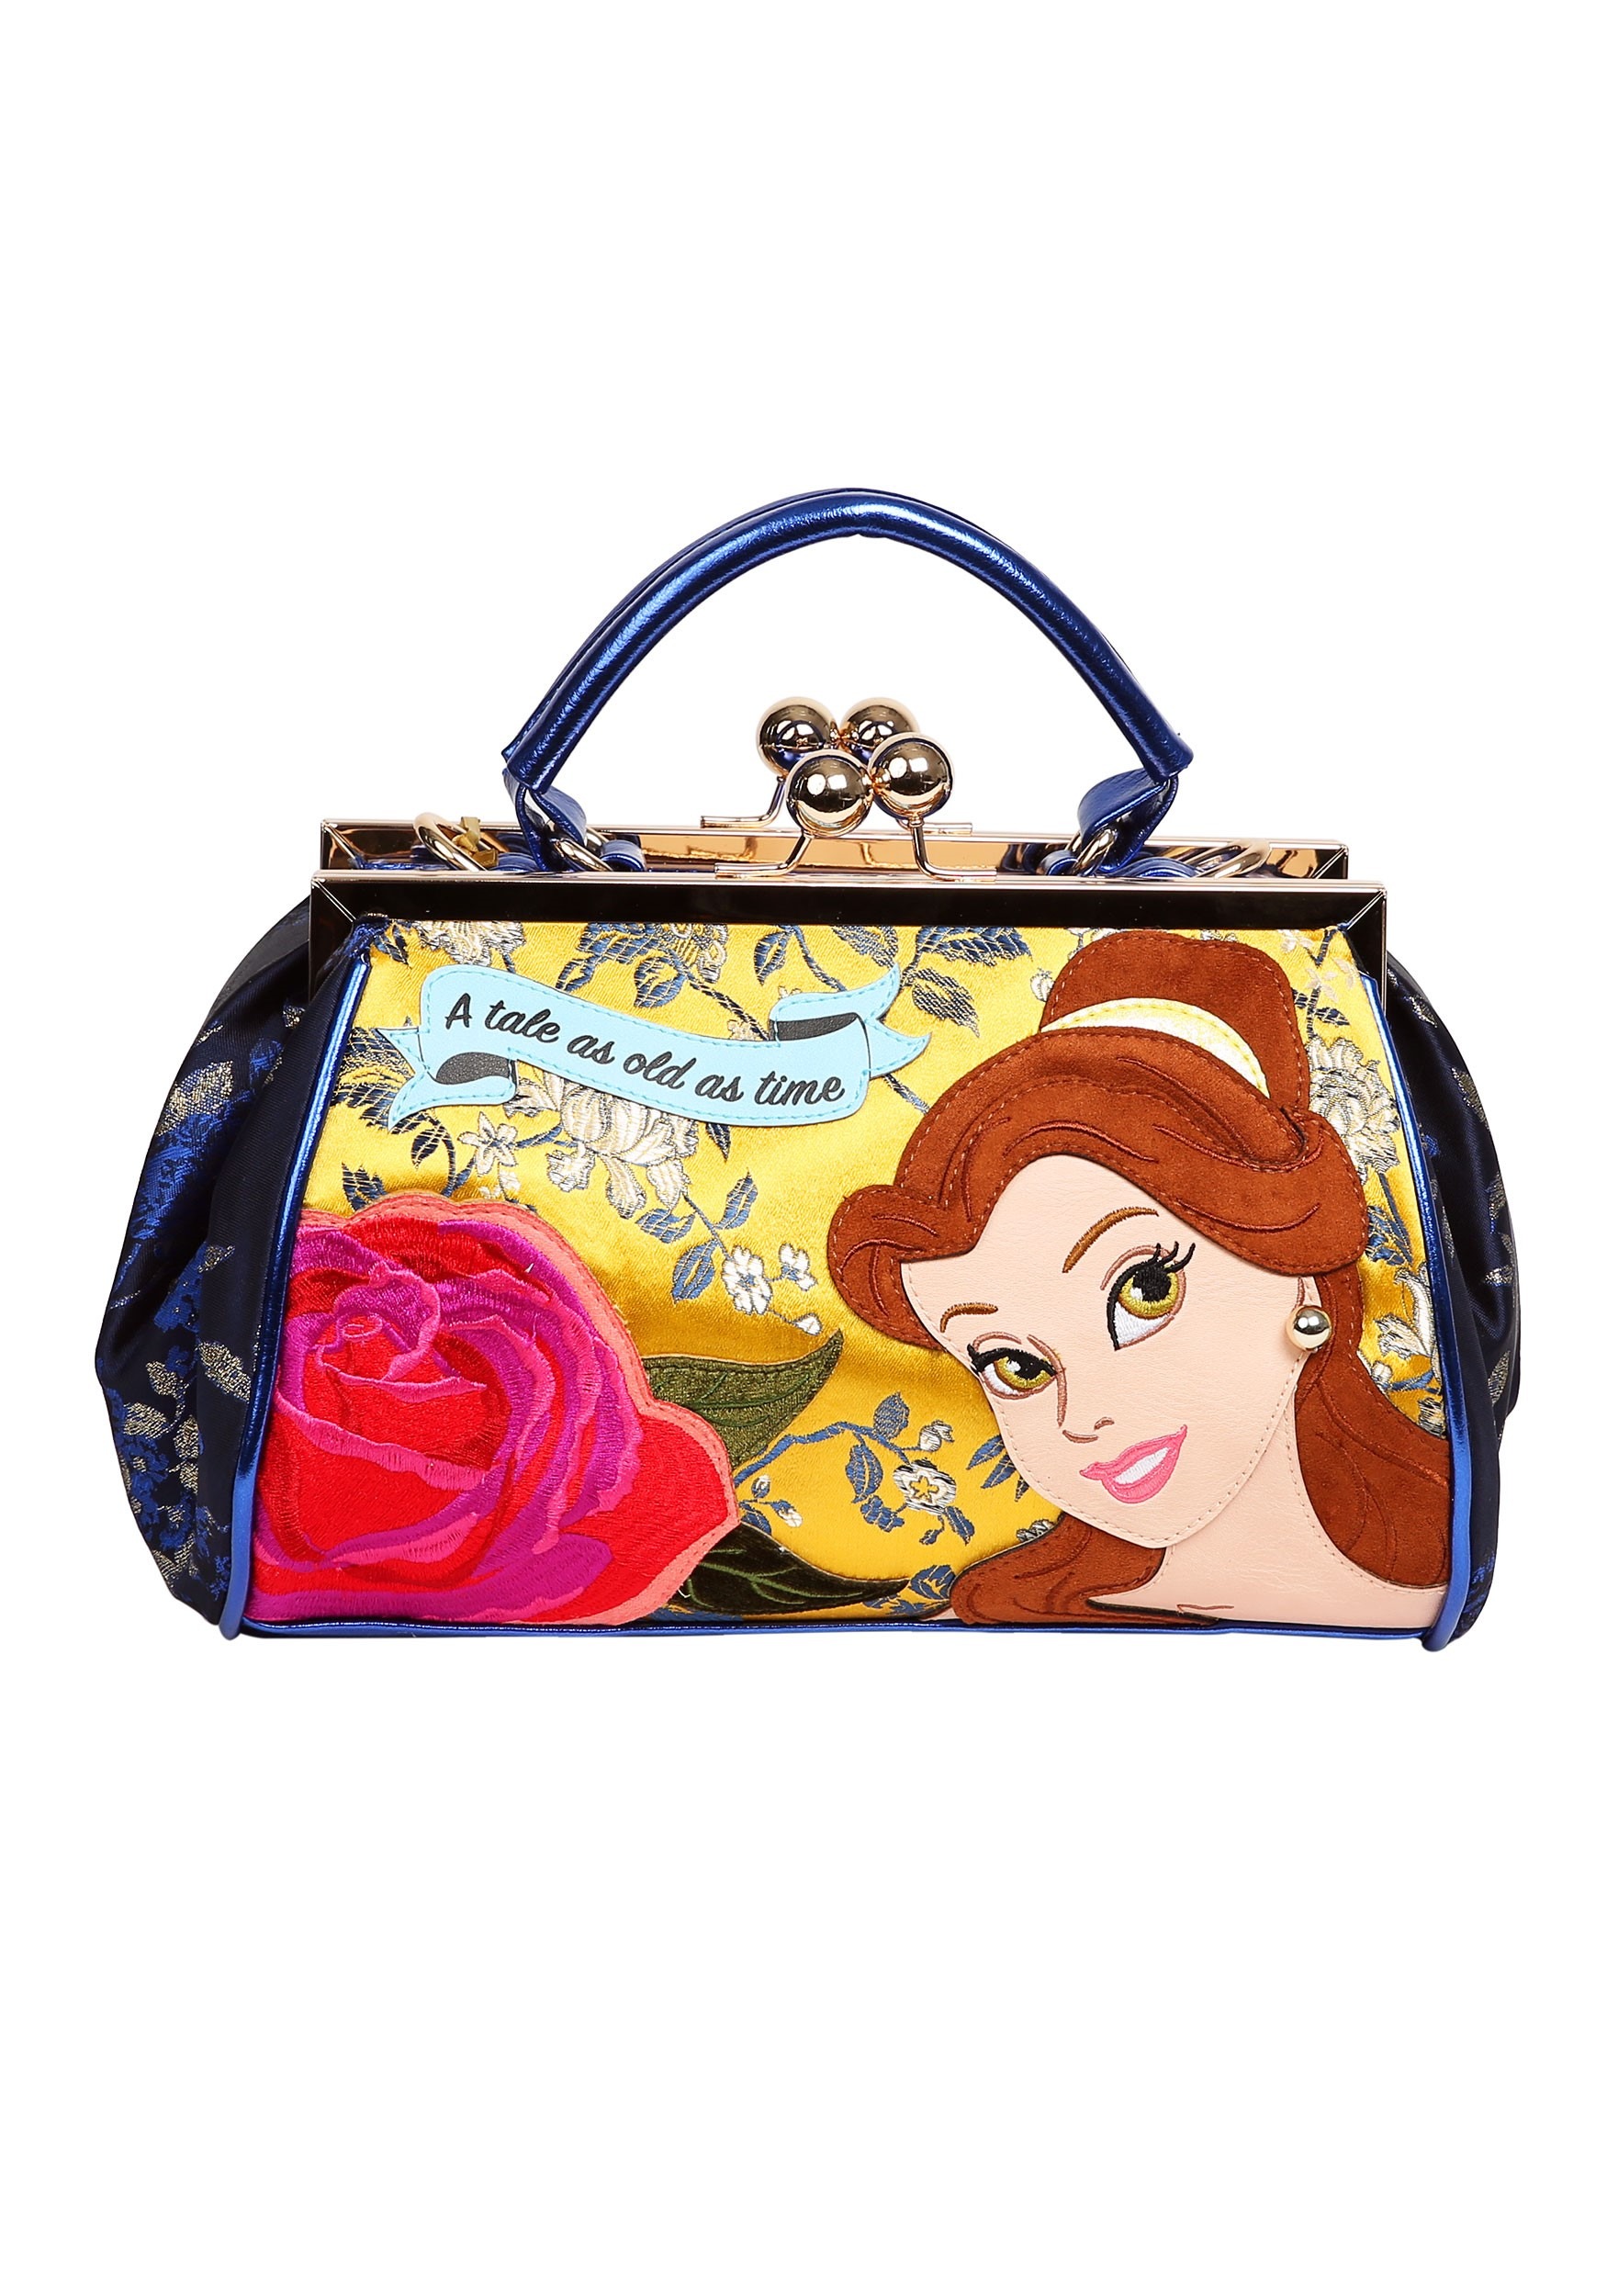 Beauty and the Beast Tale of Enchantment Bag Irregular Choice Disney Princess